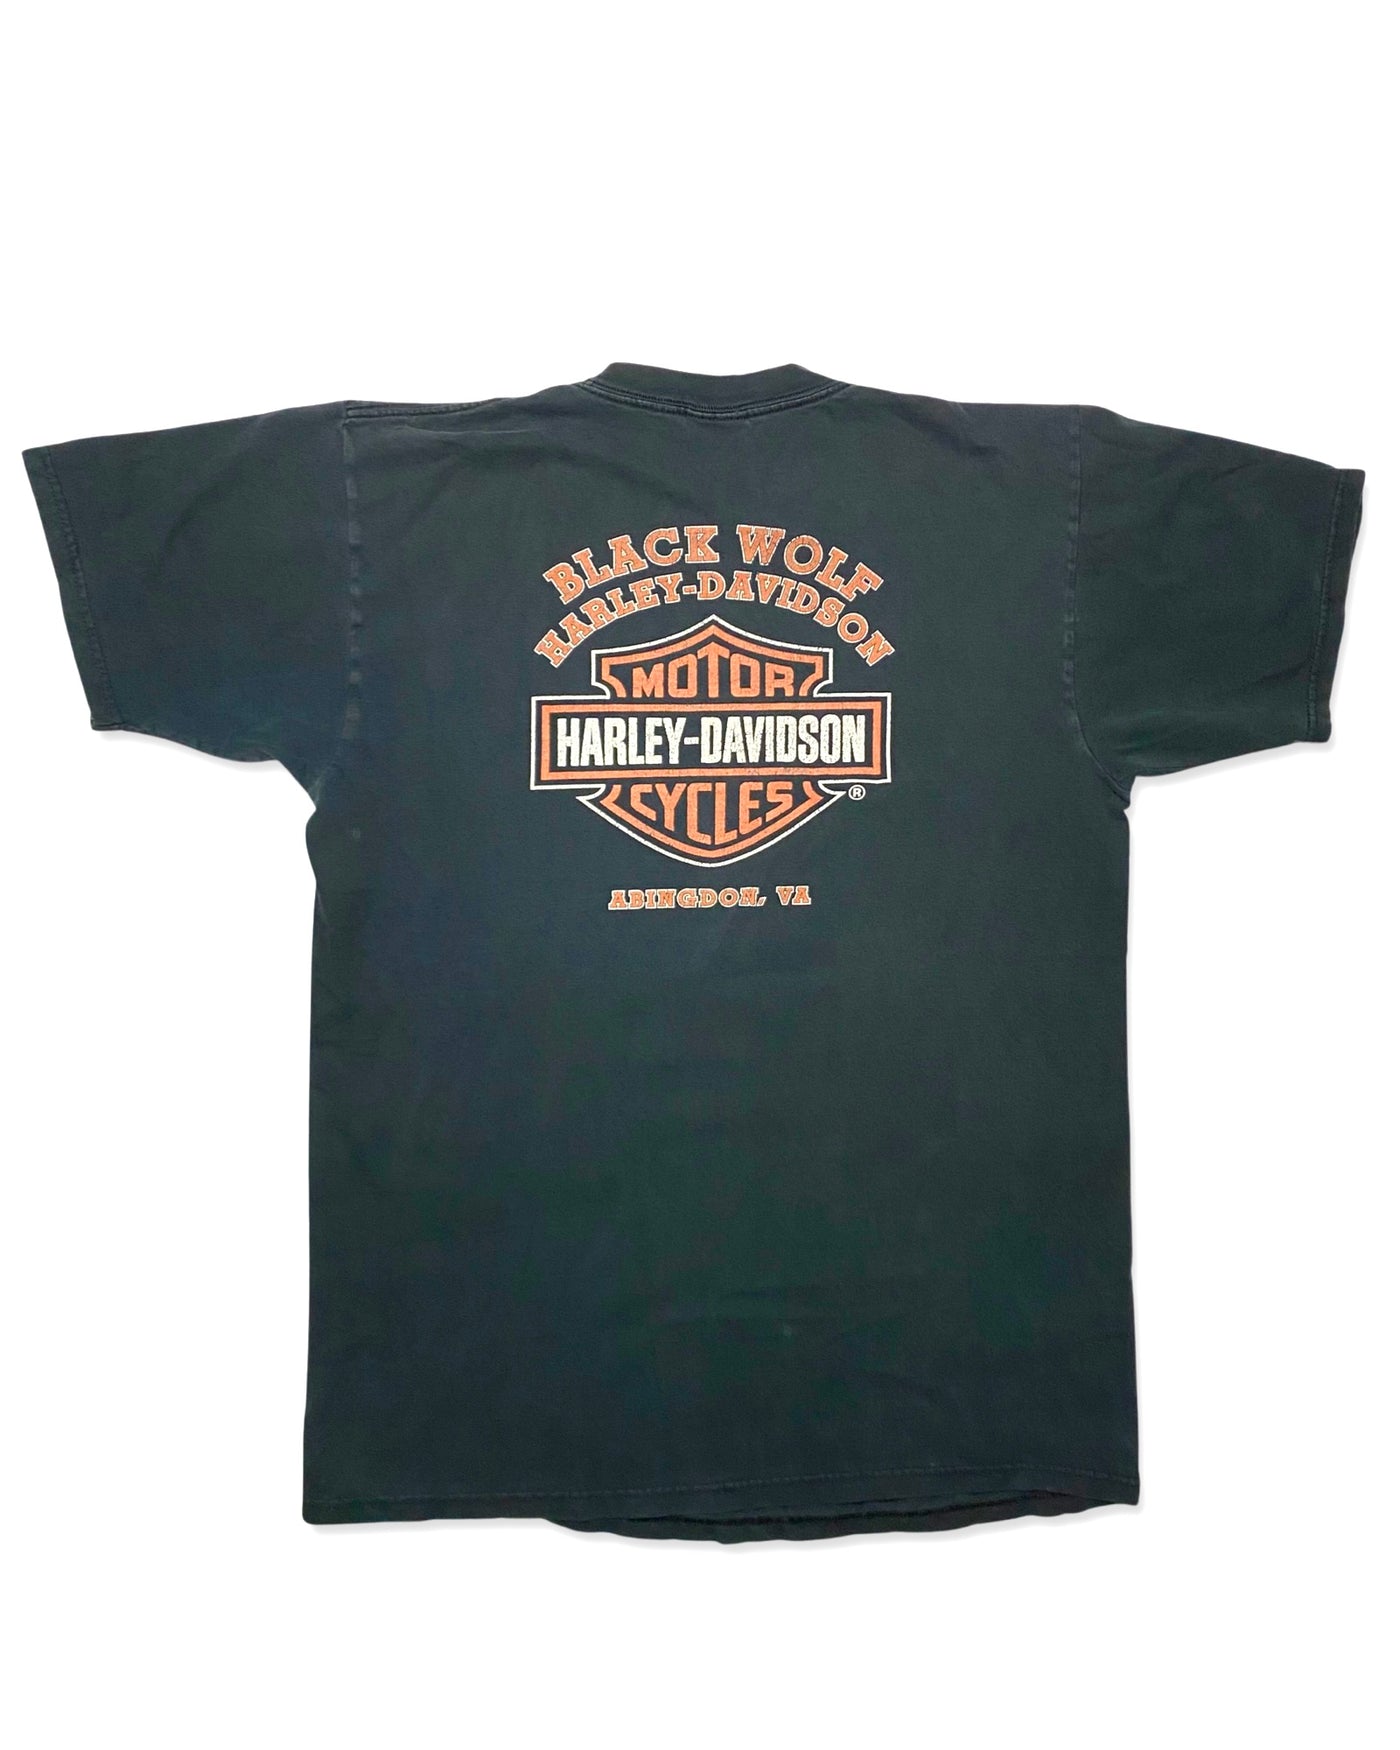 Vintage 2003 Harley Davidson T-Shirt